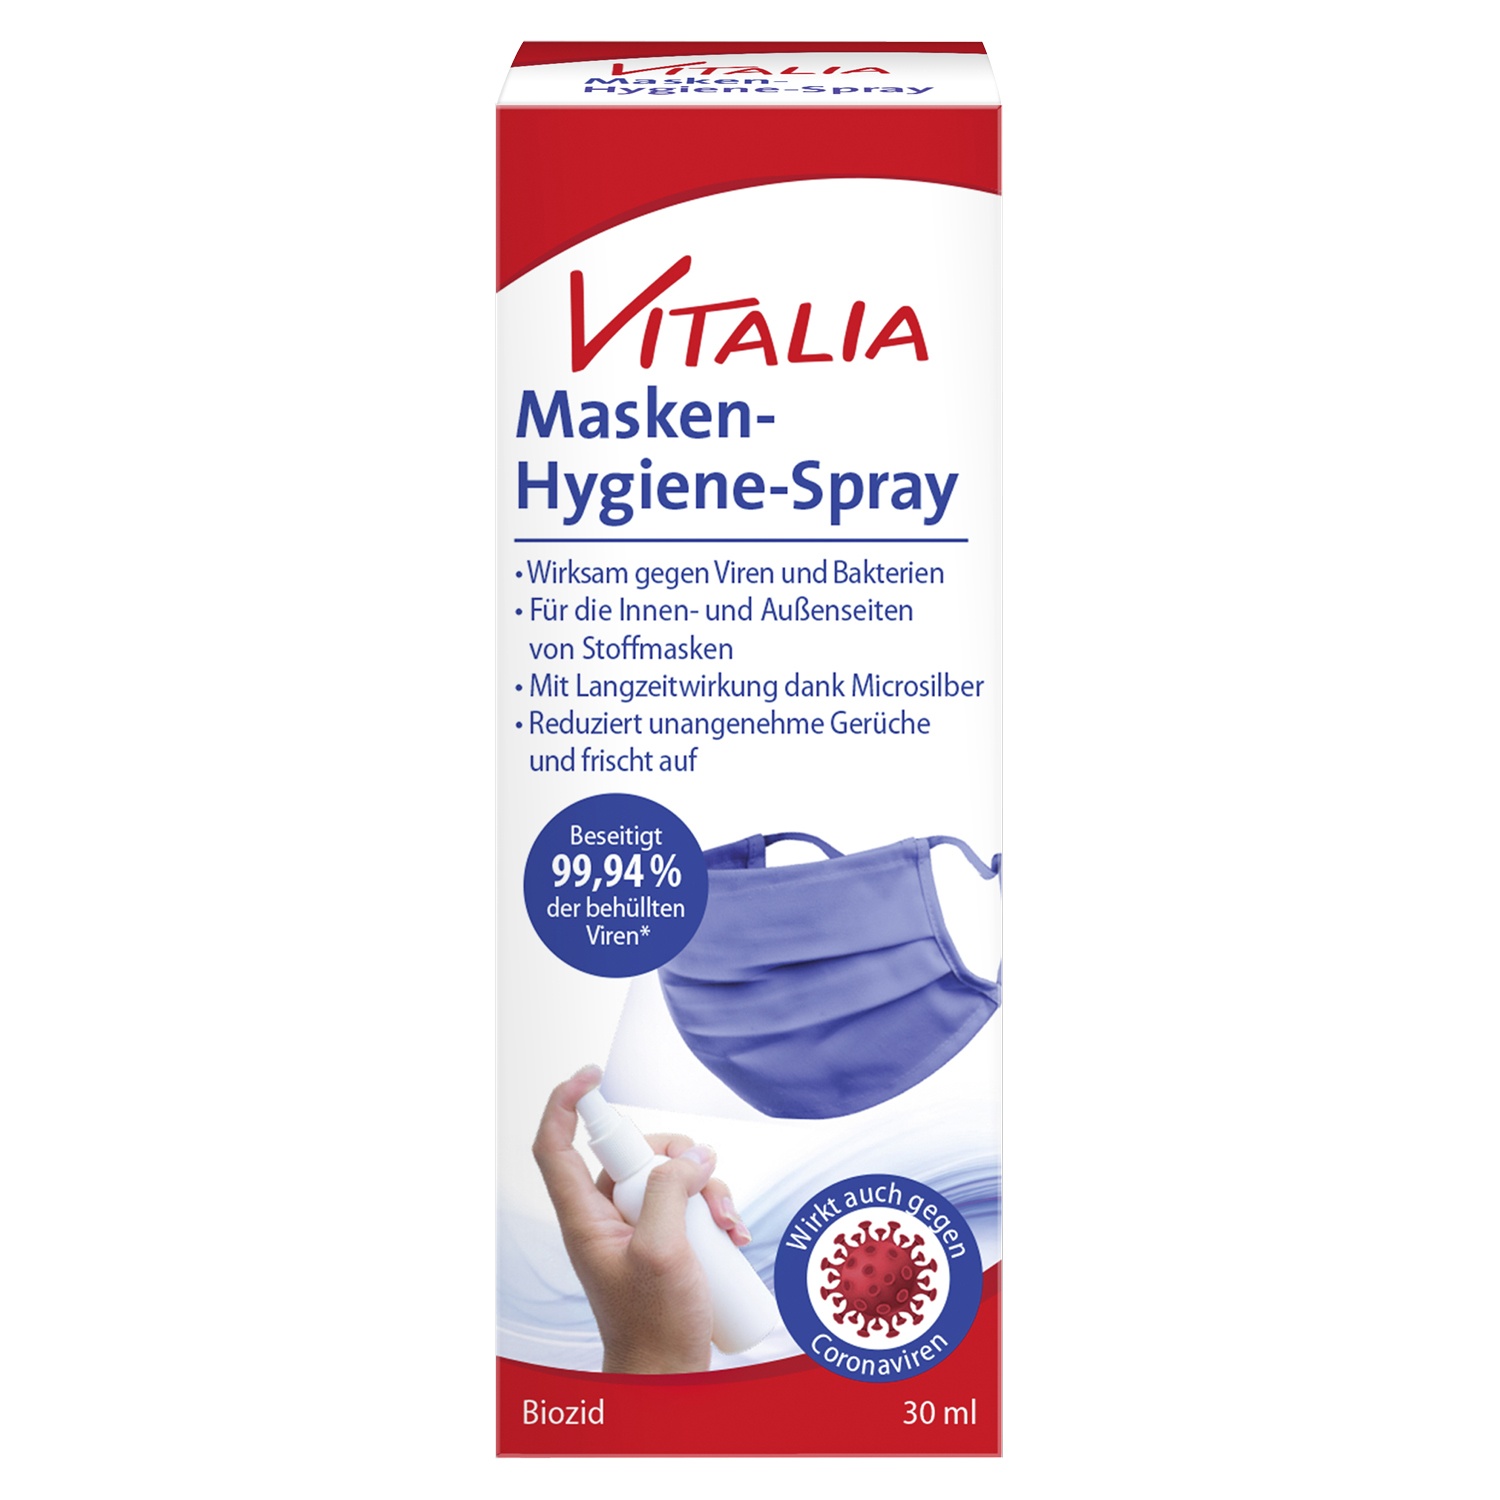 VITALIA Masken-Hygiene-Spray 30 ml³